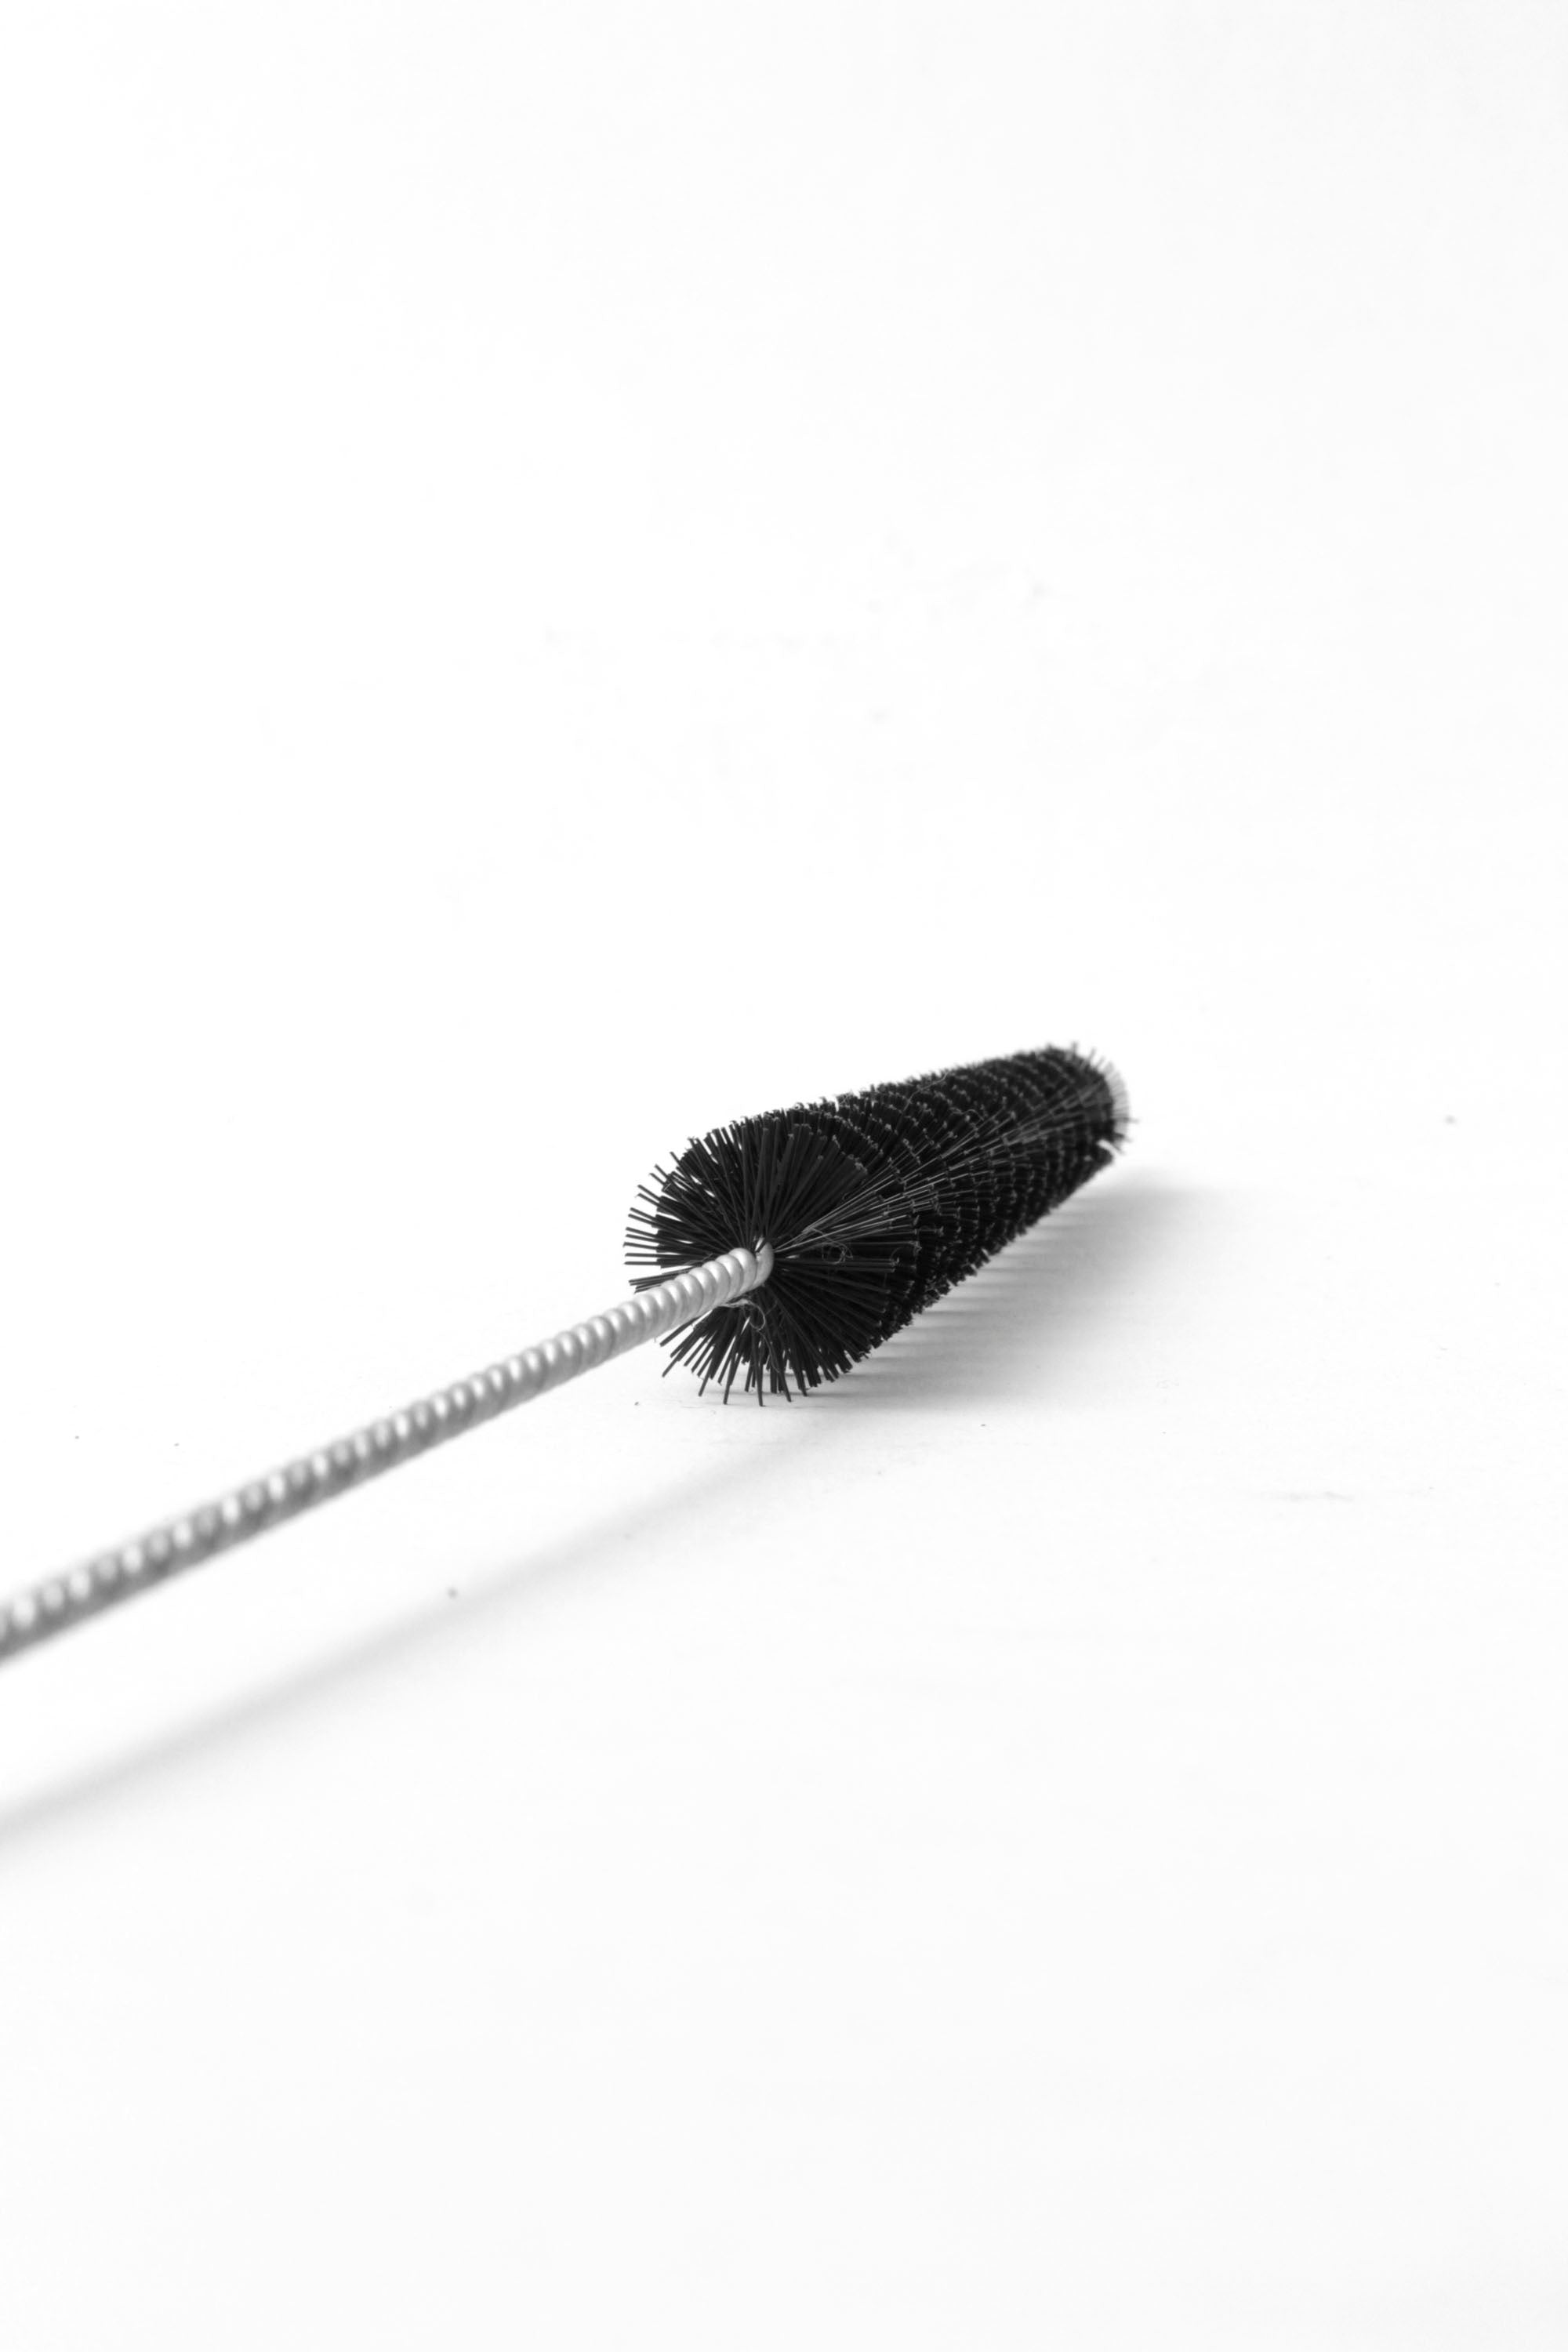 Straw Cleaning Brush - White Nylon with Straight Tip - 6L - 1/4 Diameter